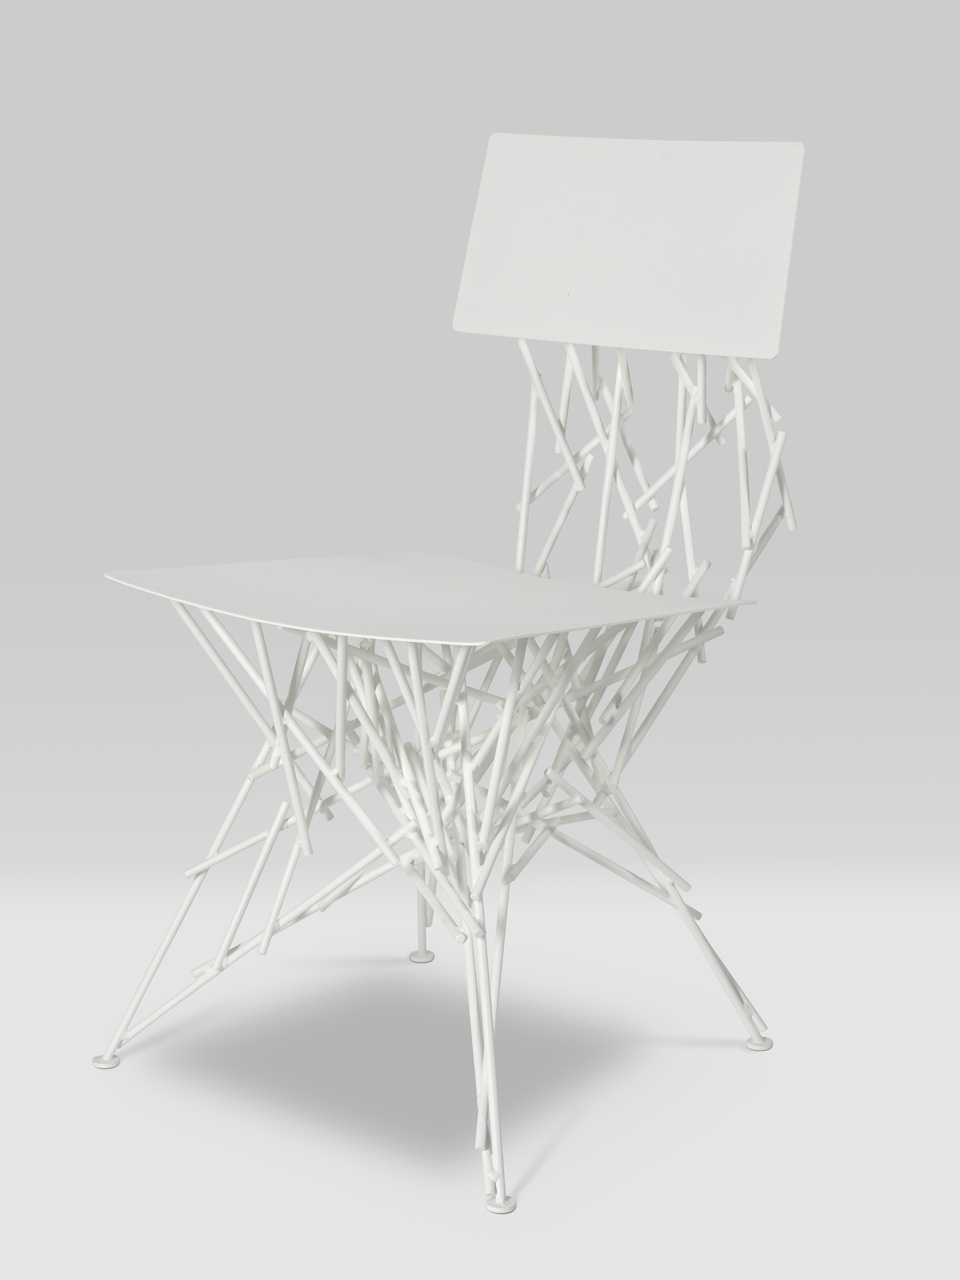 Sketch chair prototype 1